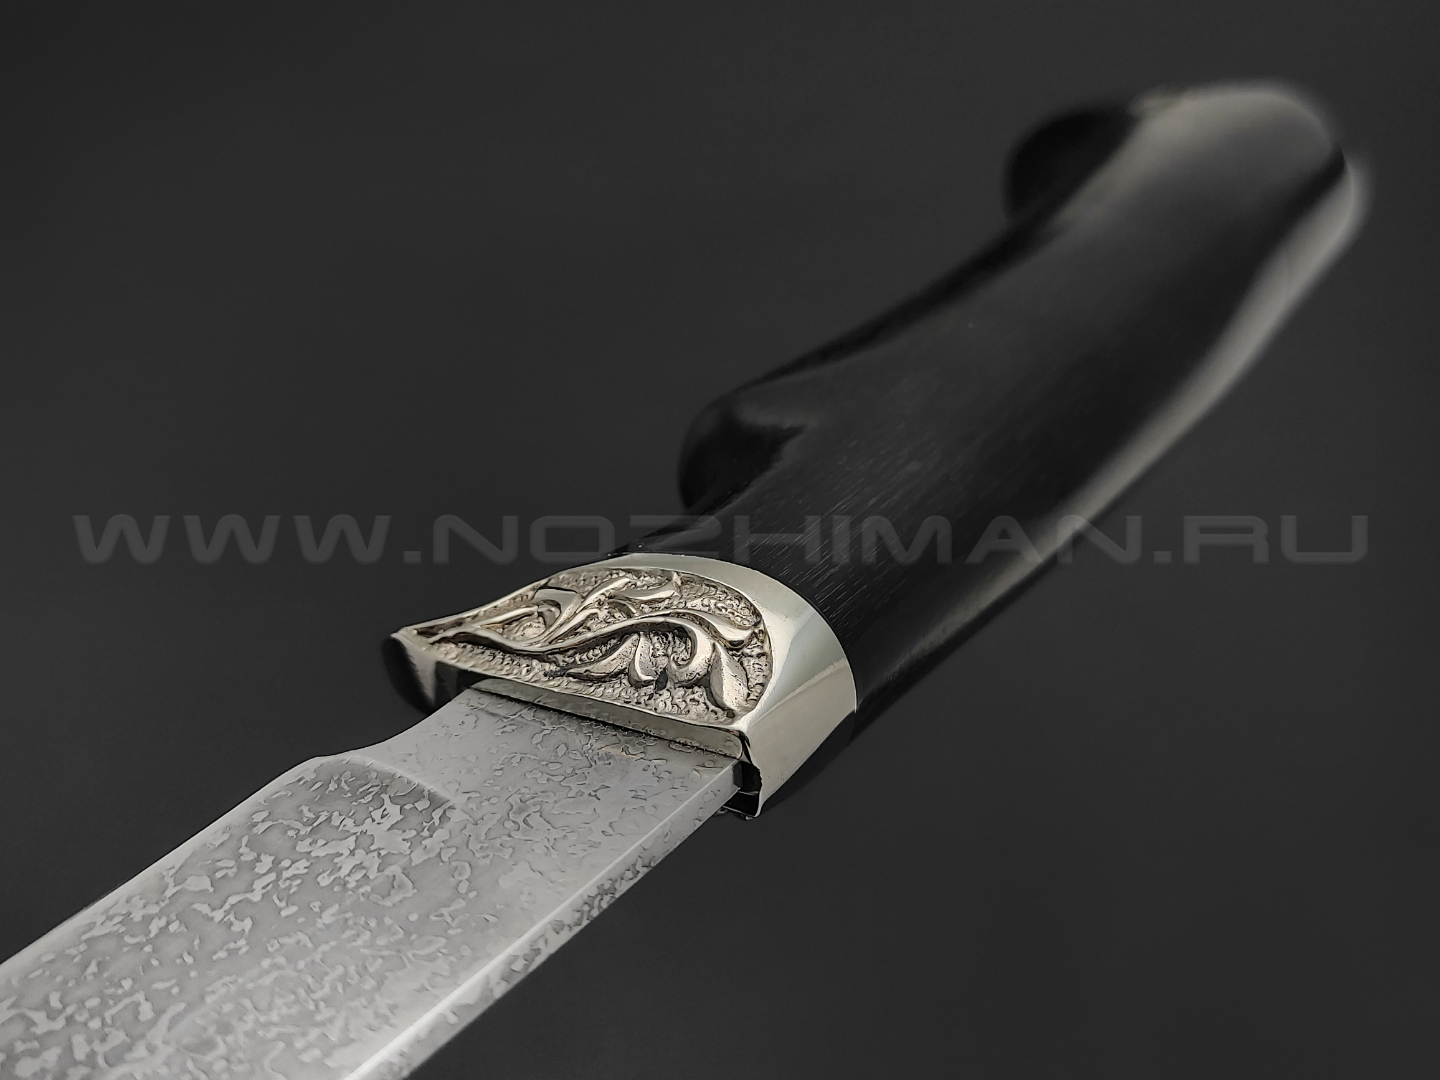 Нож "Газель-М" сталь Алмазка ХВ5, рукоять дерево граб, мельхиор (Фурсач А. А.)